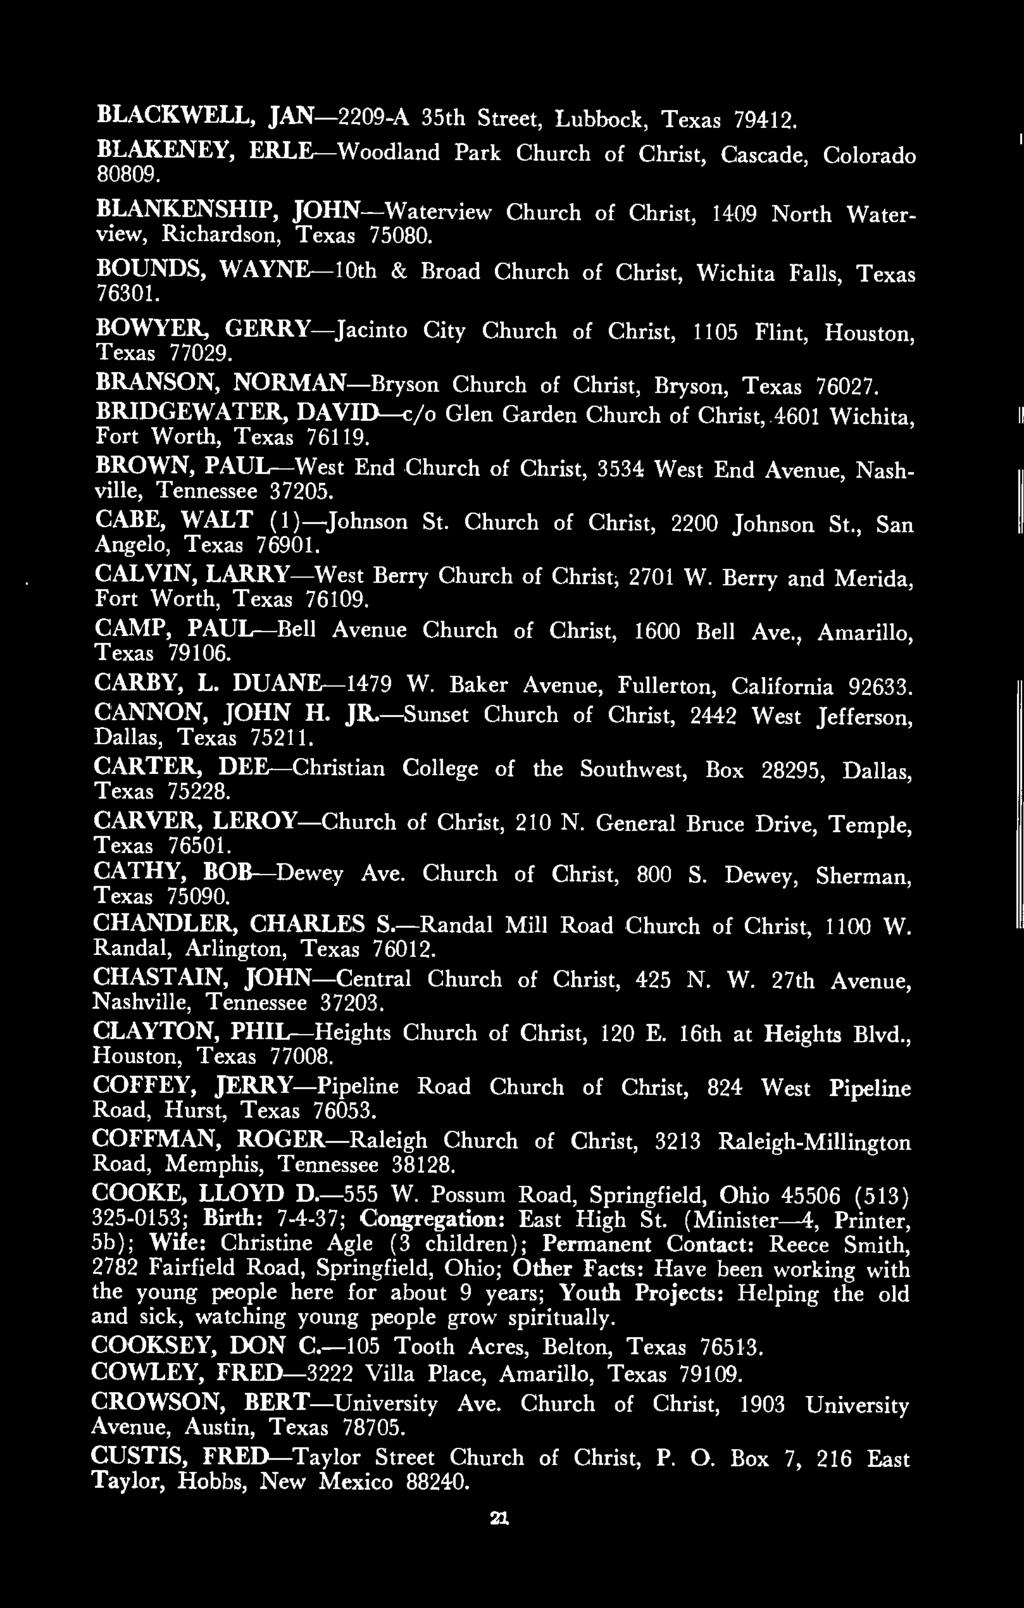 & Broad Church of Christ, Wichita Falls, Texa s BOWYER, GERRY- Jacinto City Church of Christ, 1105 Flint, Houston, Texas 77029. BRANSON, NORMAN - Bryson Chur ch of Chri st, Bryson, T exas 76027.